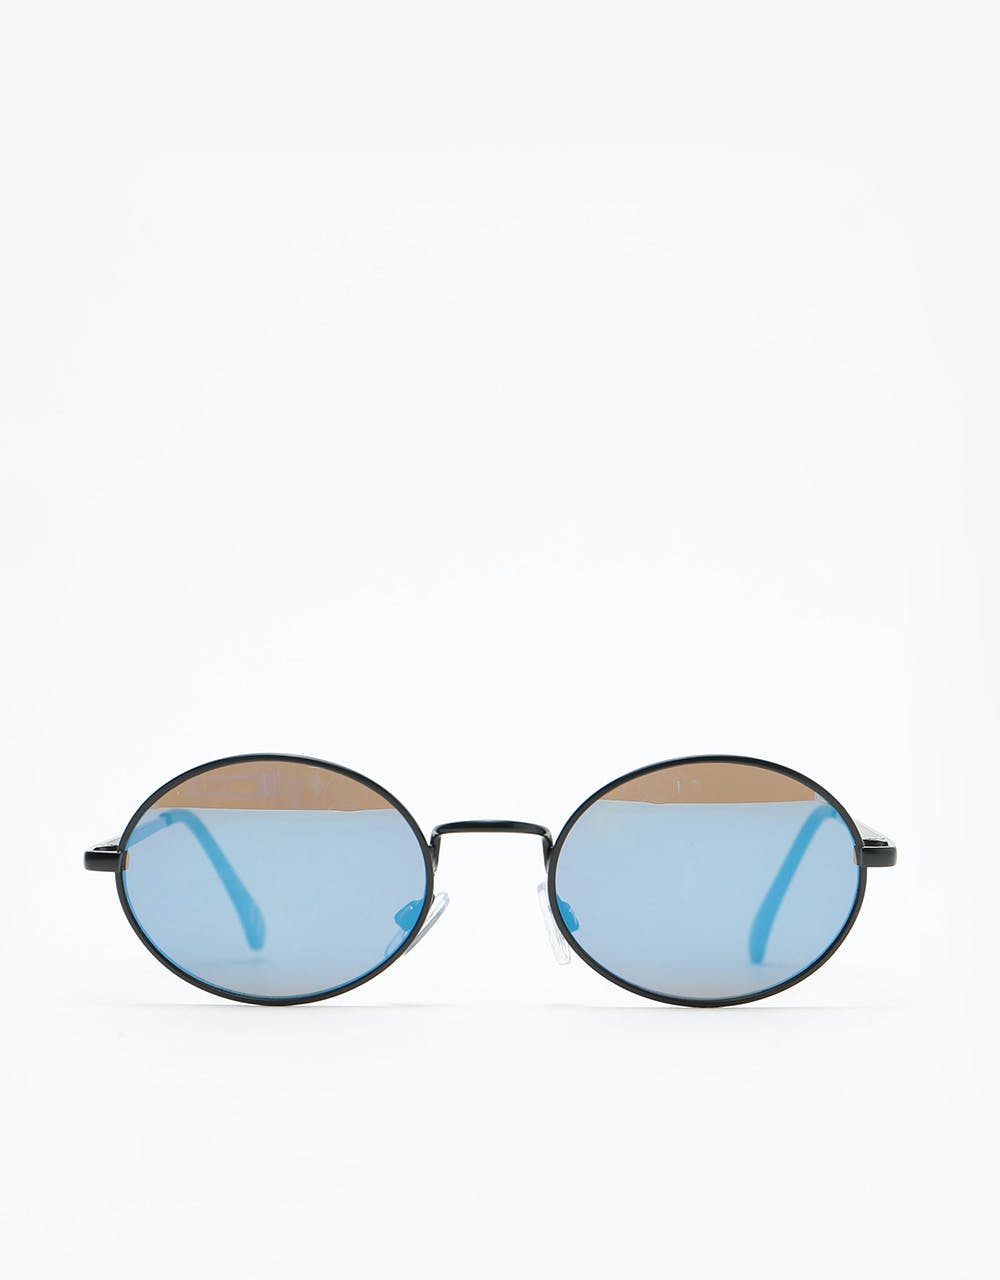 Vans As If Sunglasses - Matte Black/Blue Mirror